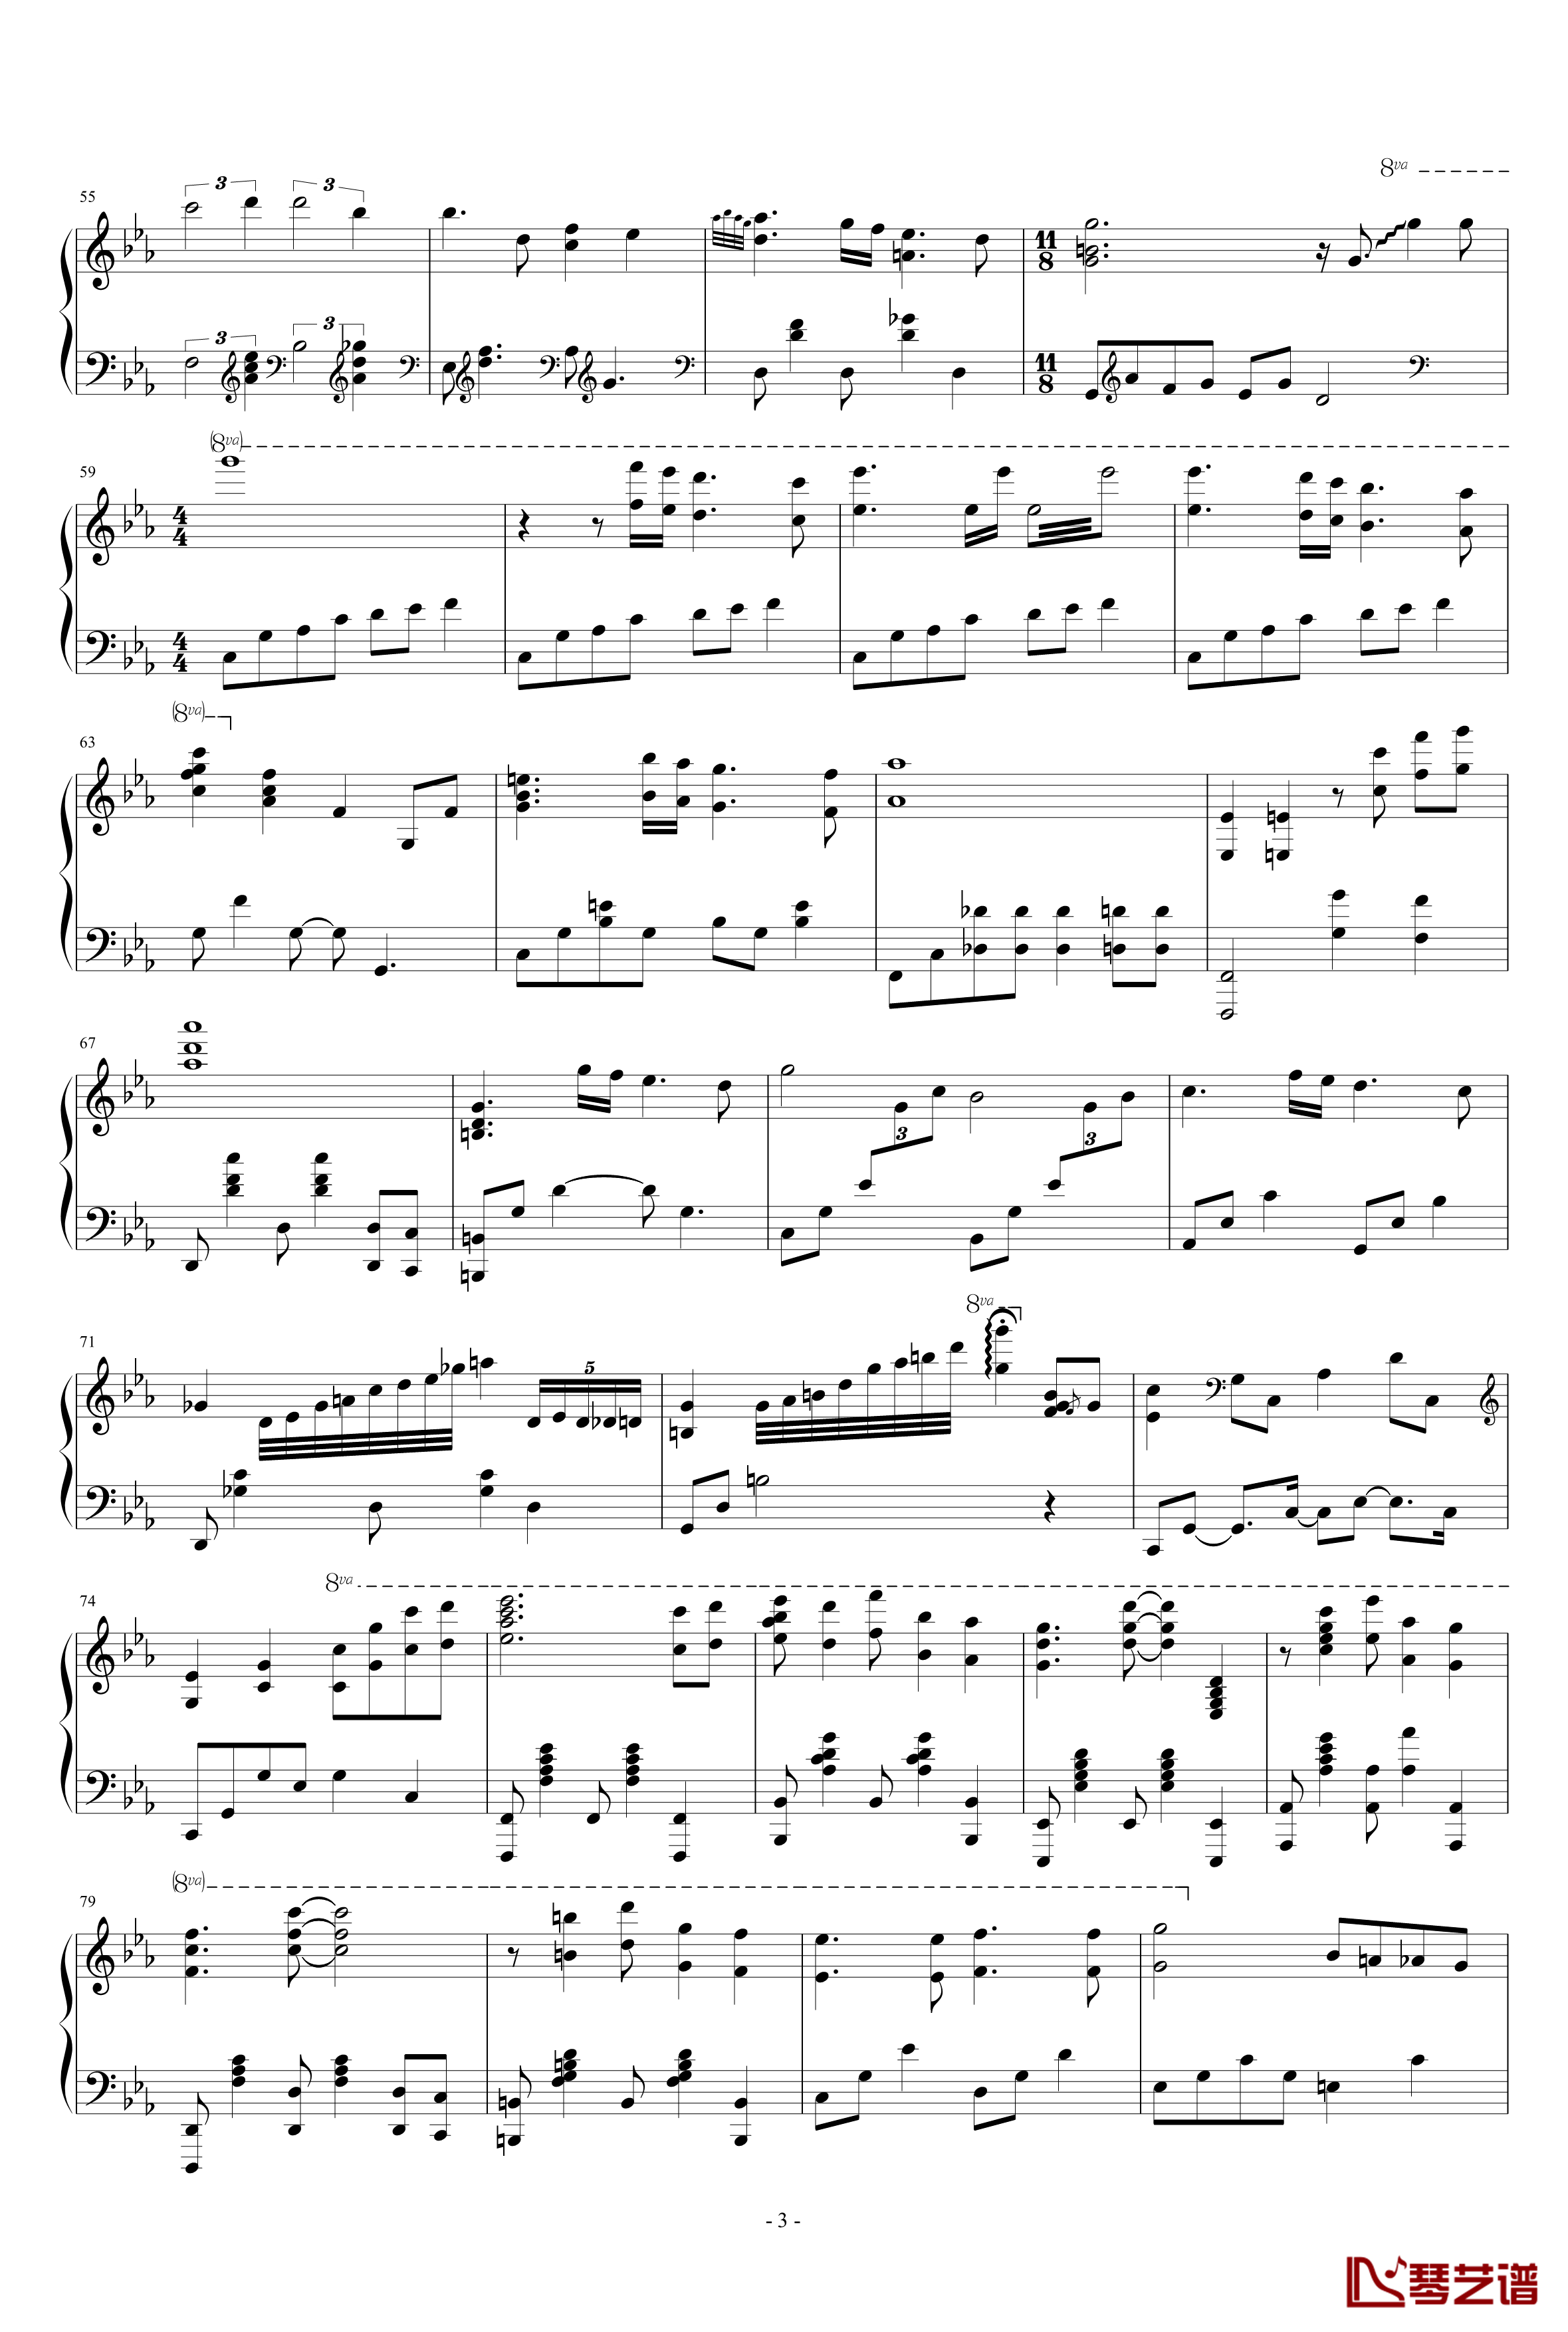 Oblivion钢琴谱-独奏-Astor Piazzolla